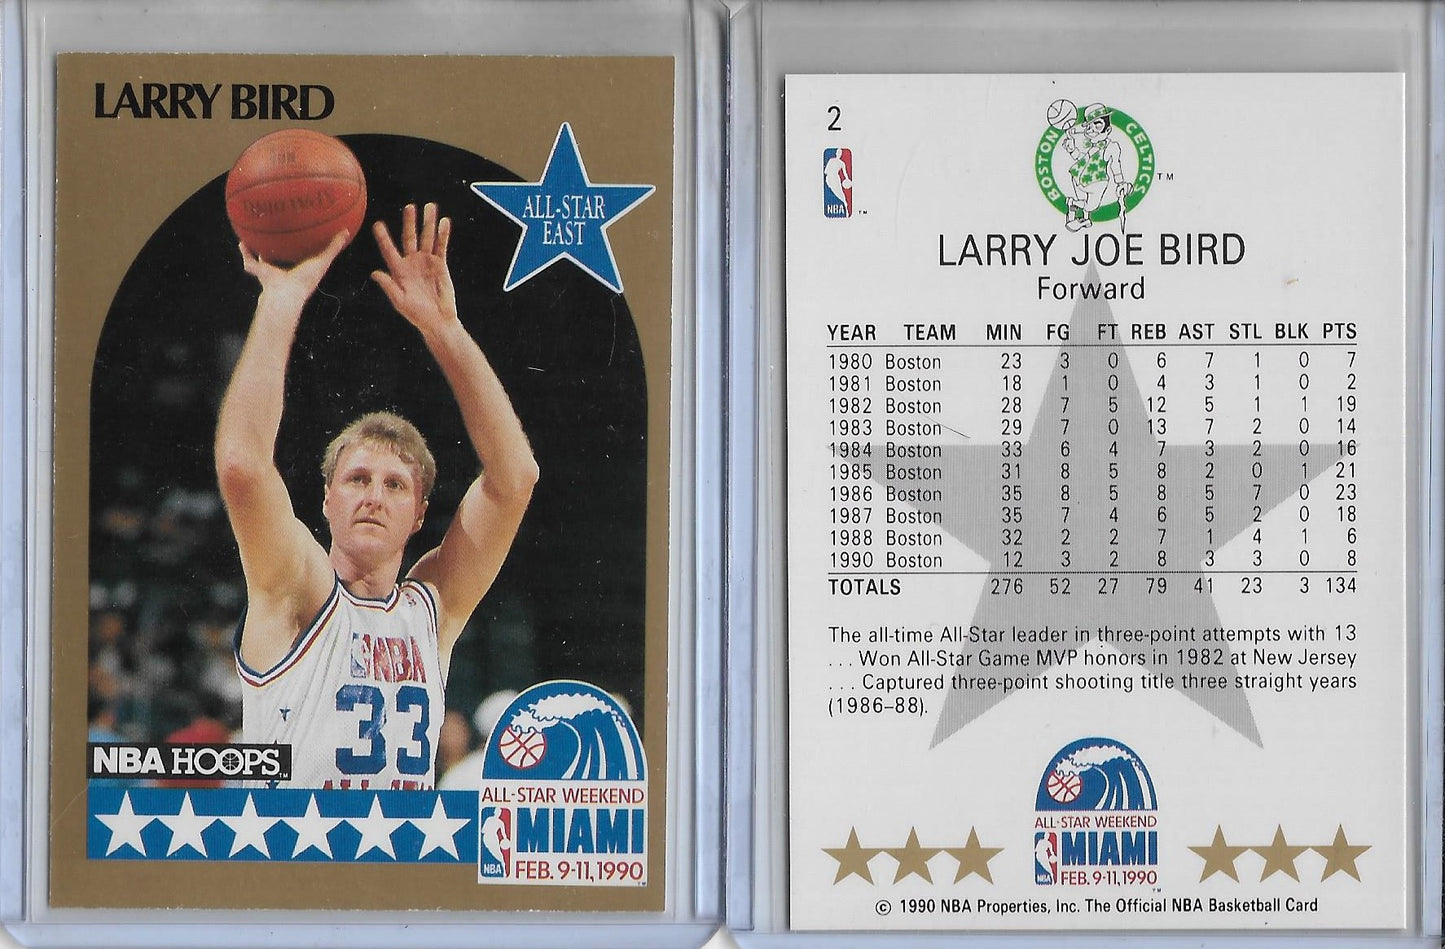 HOF:  1990 NBA HOOPS #2 LARRY BIRD BOSTON CELTICS  - ALL-STAR EAST CARD